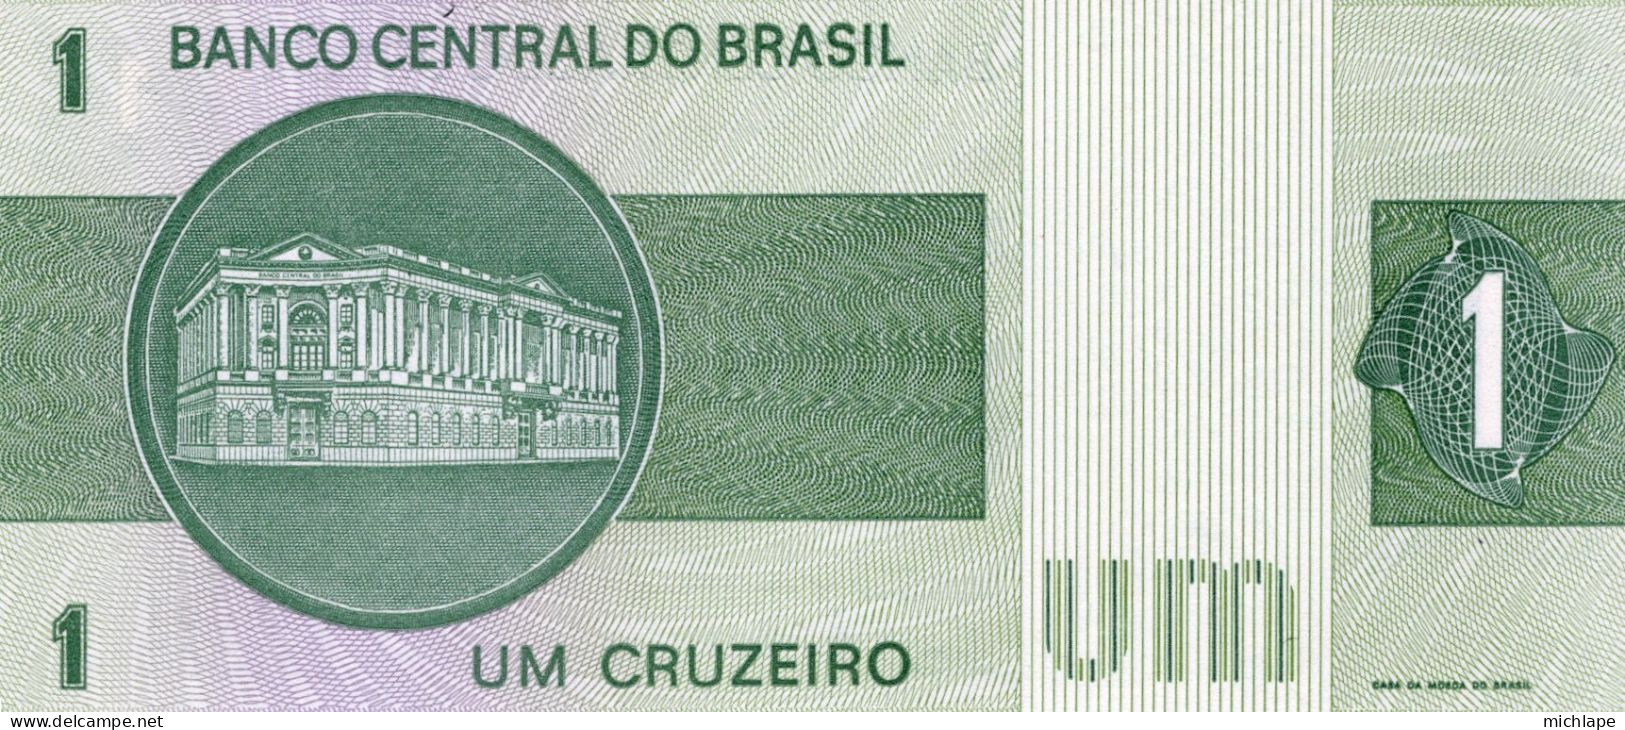 Brésil 1 Cruzeiro B15851 Billet Neuf - Brasilien